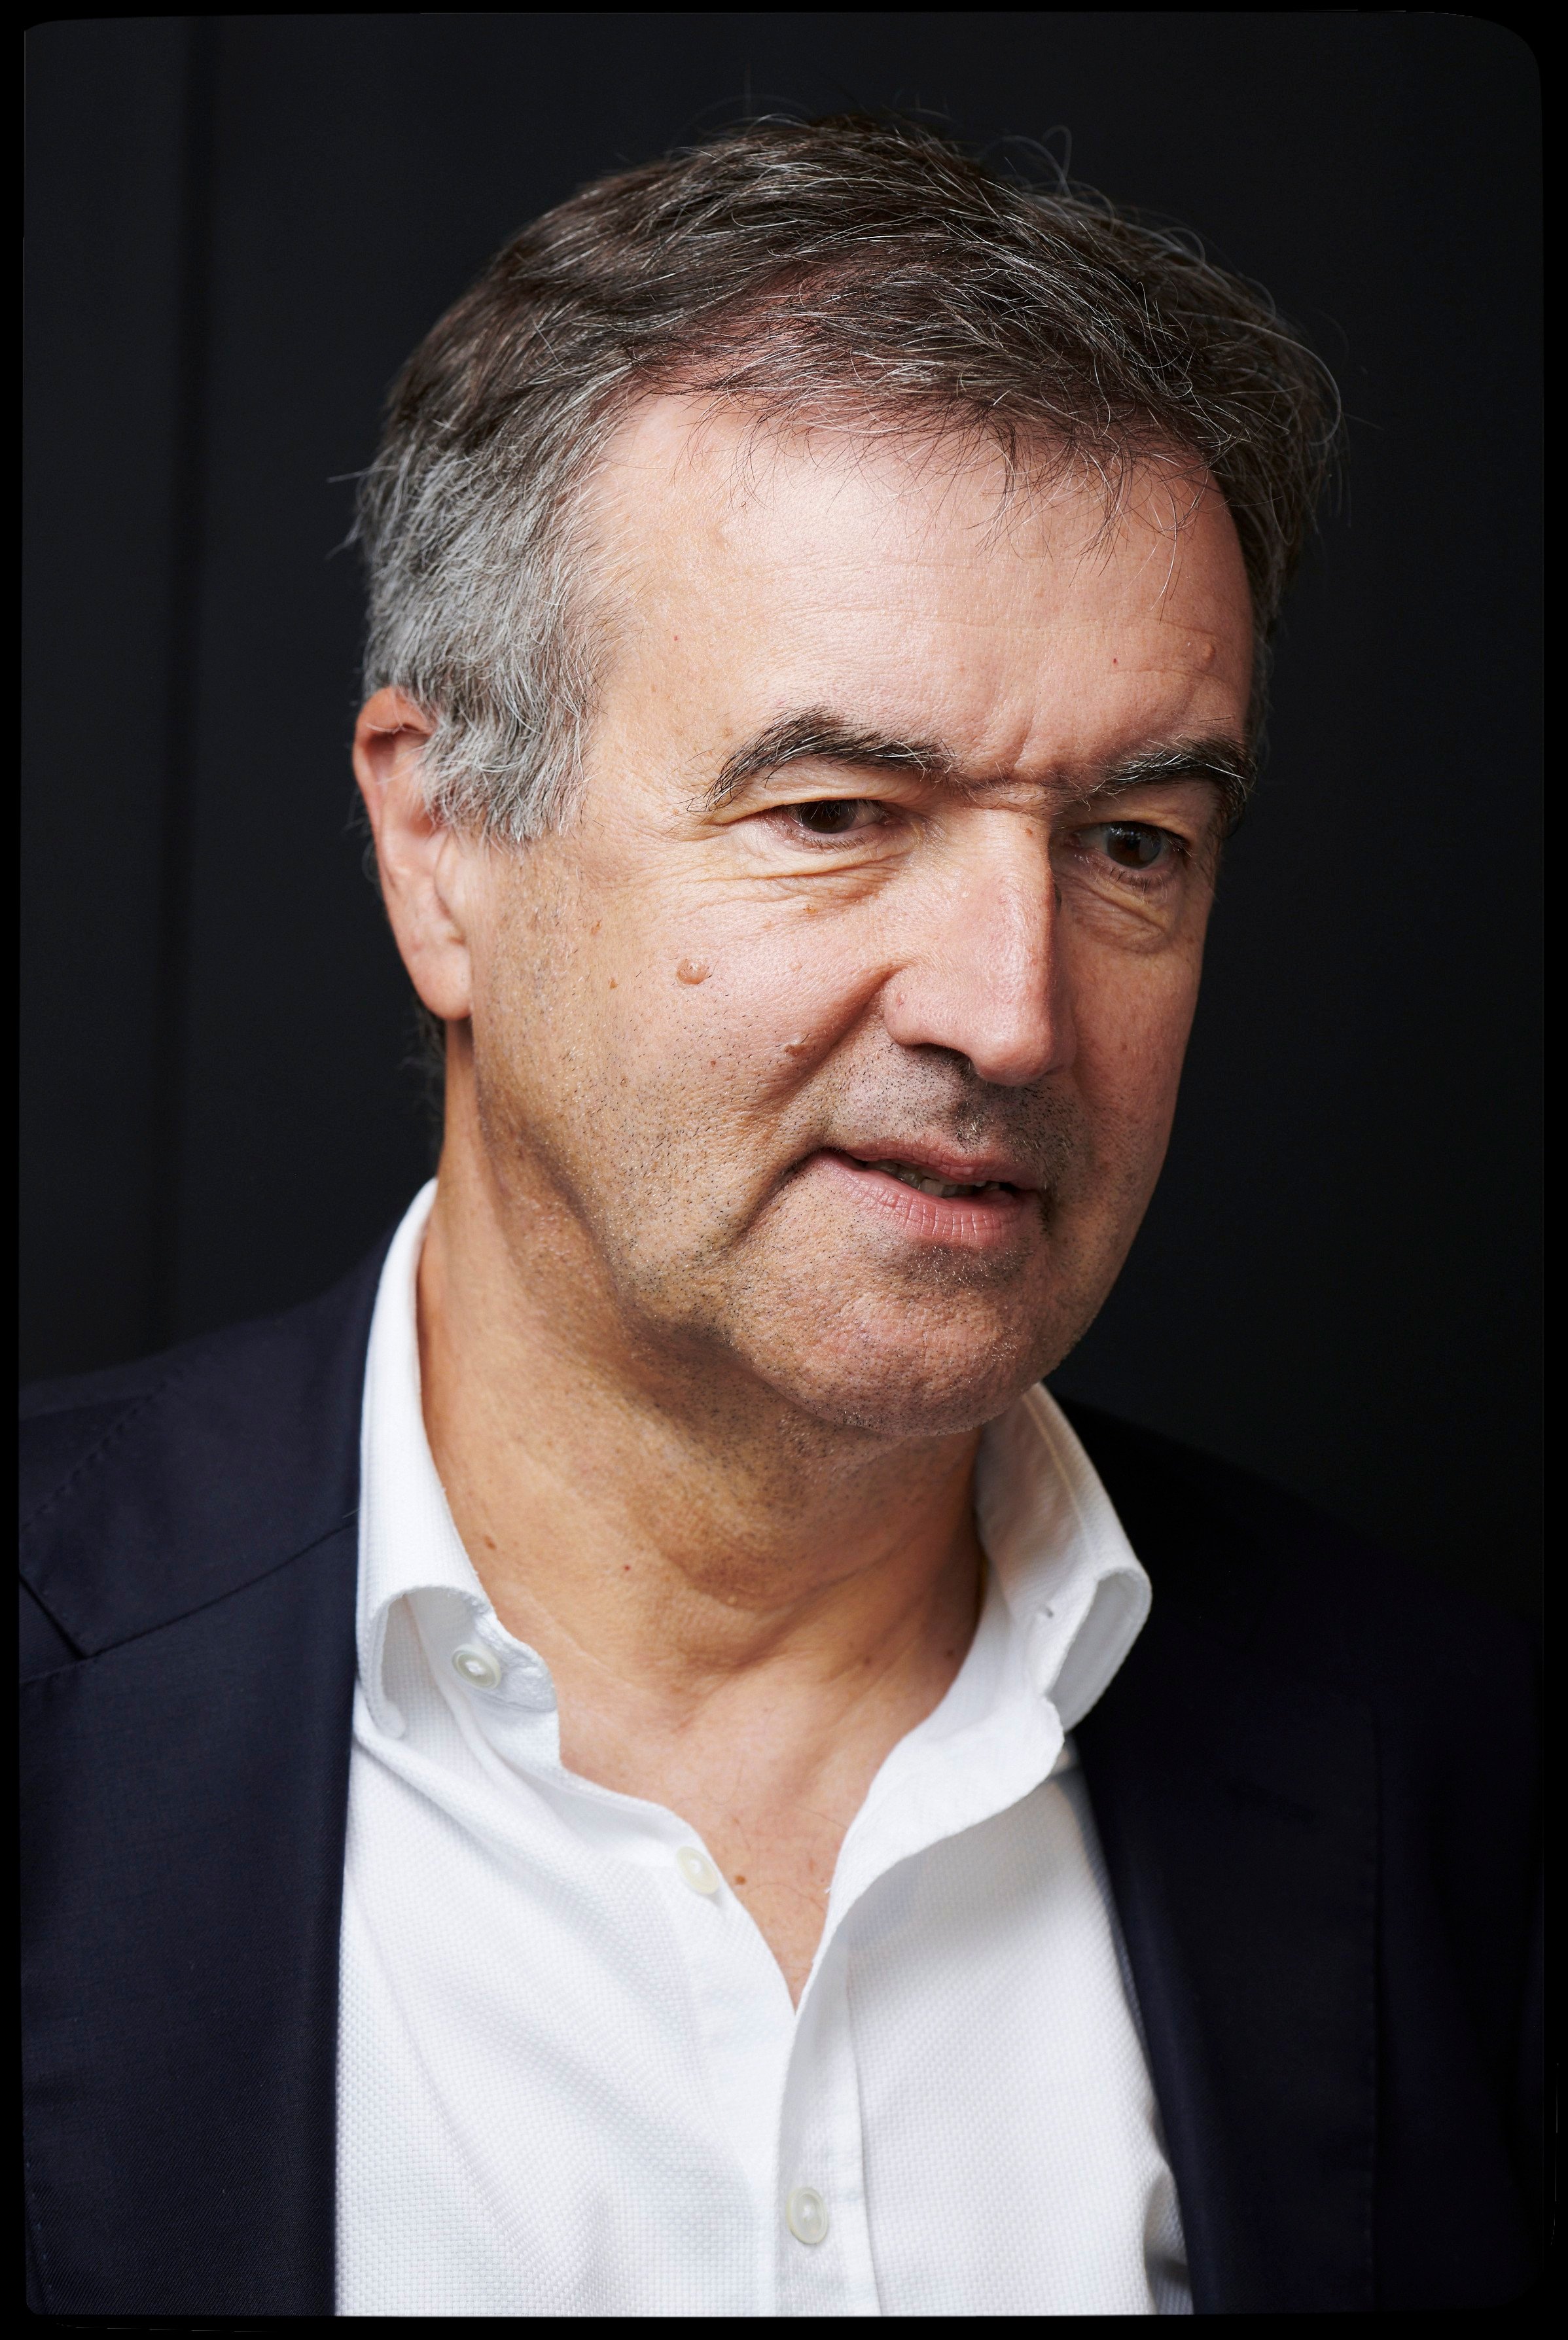   Philippe Voisin  - CEO Crelan 